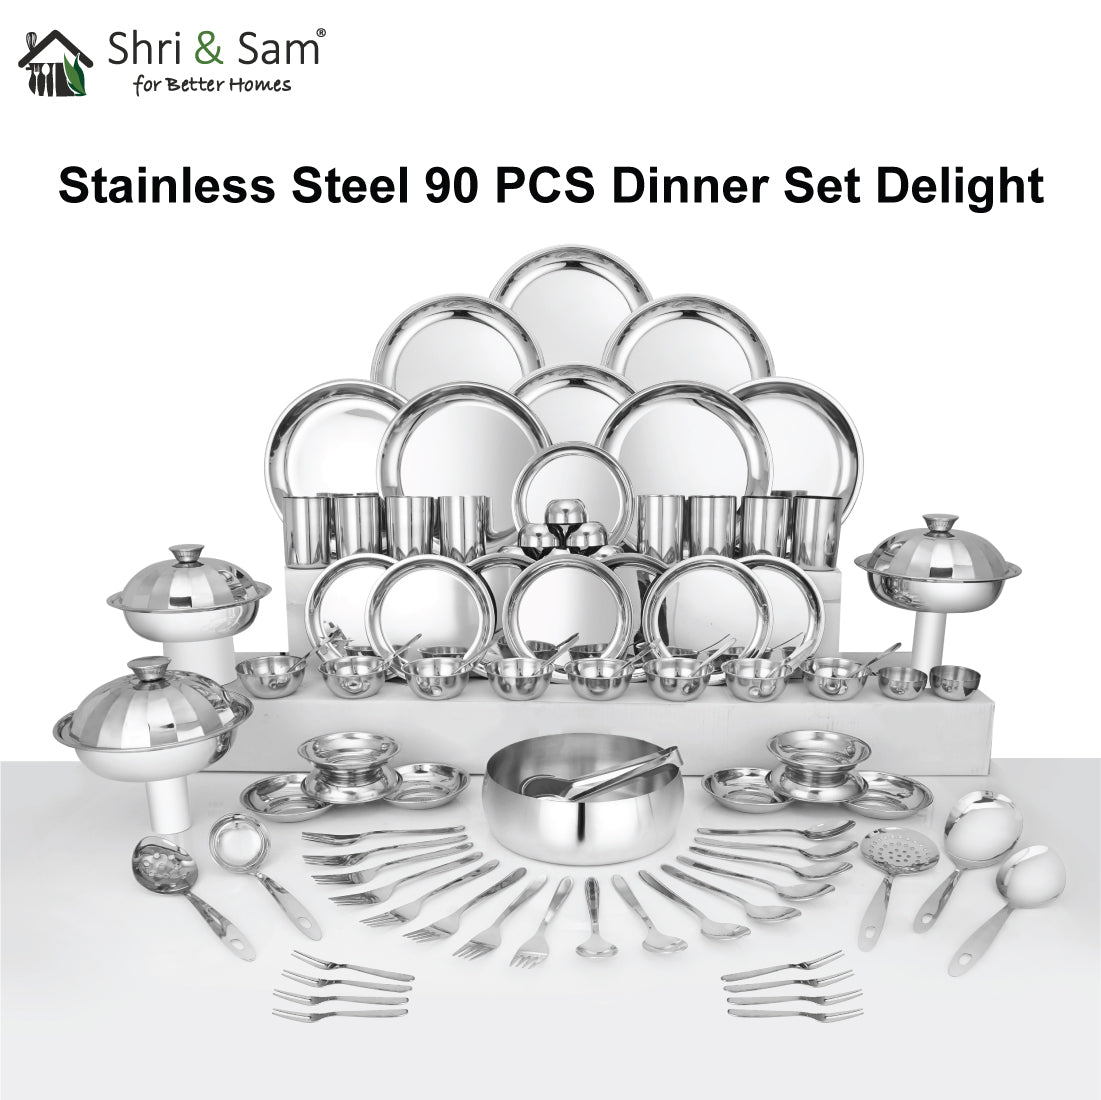 Stainless Steel 90 PCS Dinner set (8 People) Delight